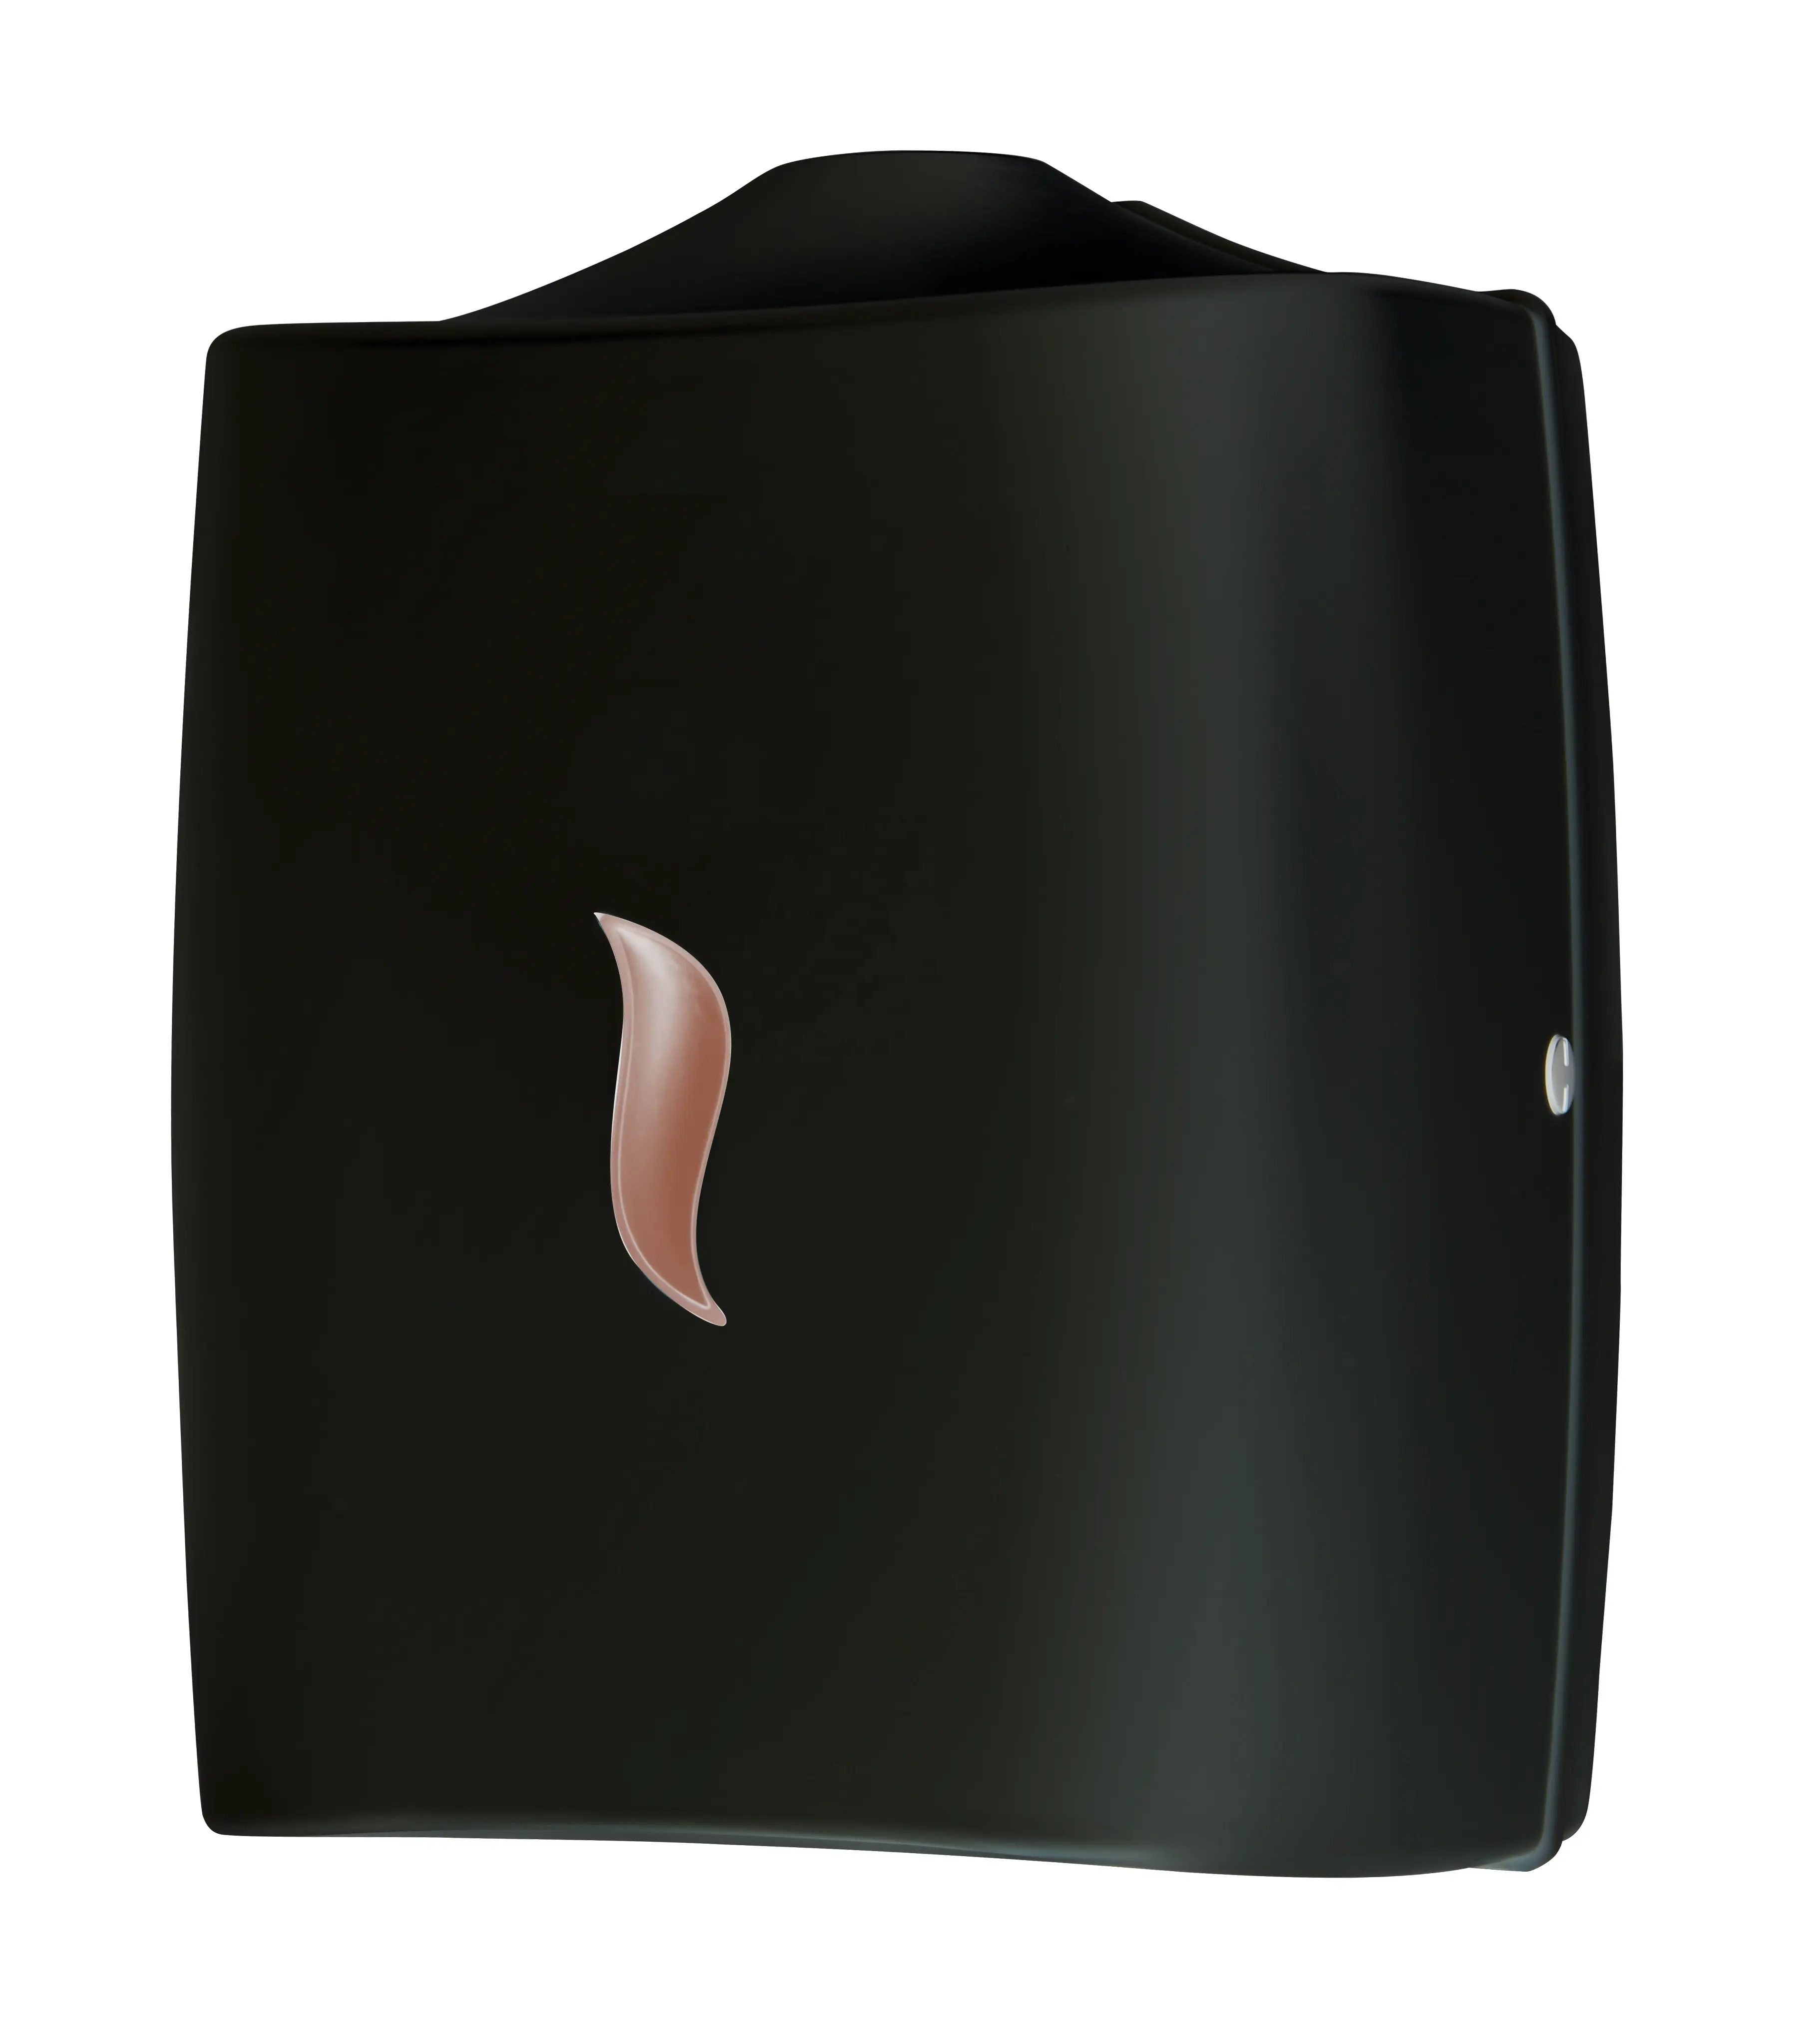 Pusat Menarik Basah Kertas Dispenser Plastik ABS Toilet Basah Kertas Handuk Dispenser Dinding Kamar Mandi Basah Tissue Dispenser